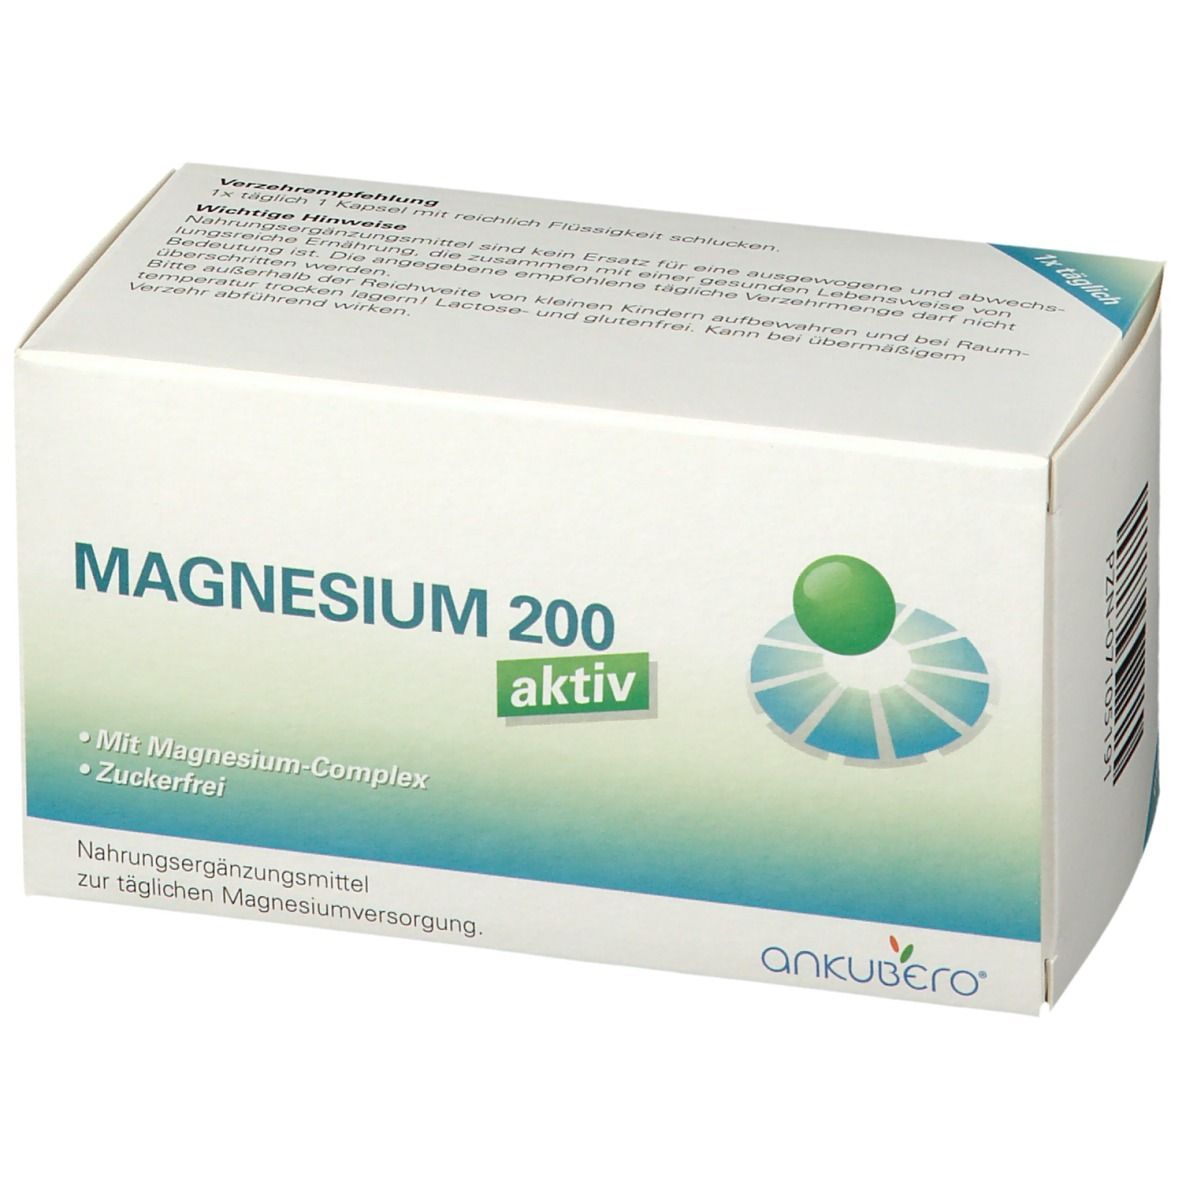 Magnesium 200 aktiv